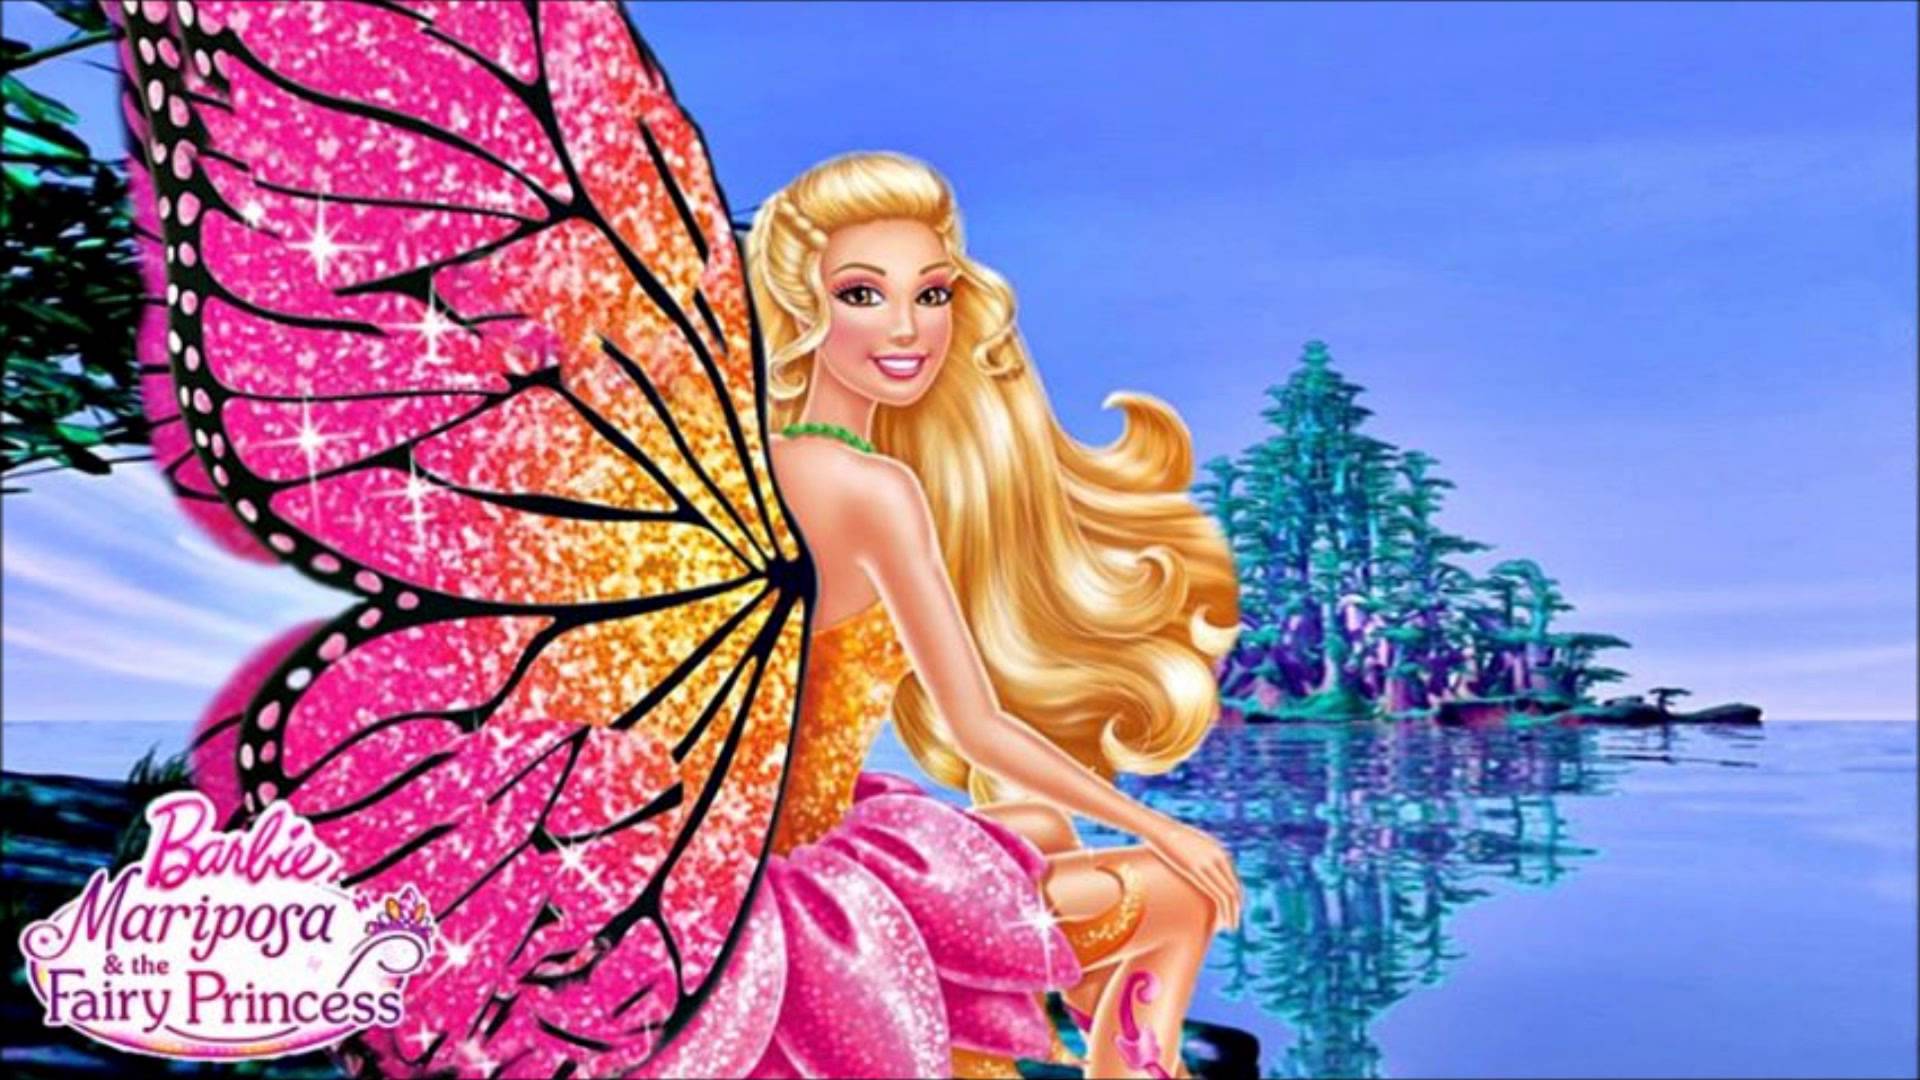 Картинка на заставку телефона для девочки. Барби Марипоса Русалка. Барби принцесса Марипоса. Барби принцесса Фейри. Барби Марипоса и принцесса Фея.